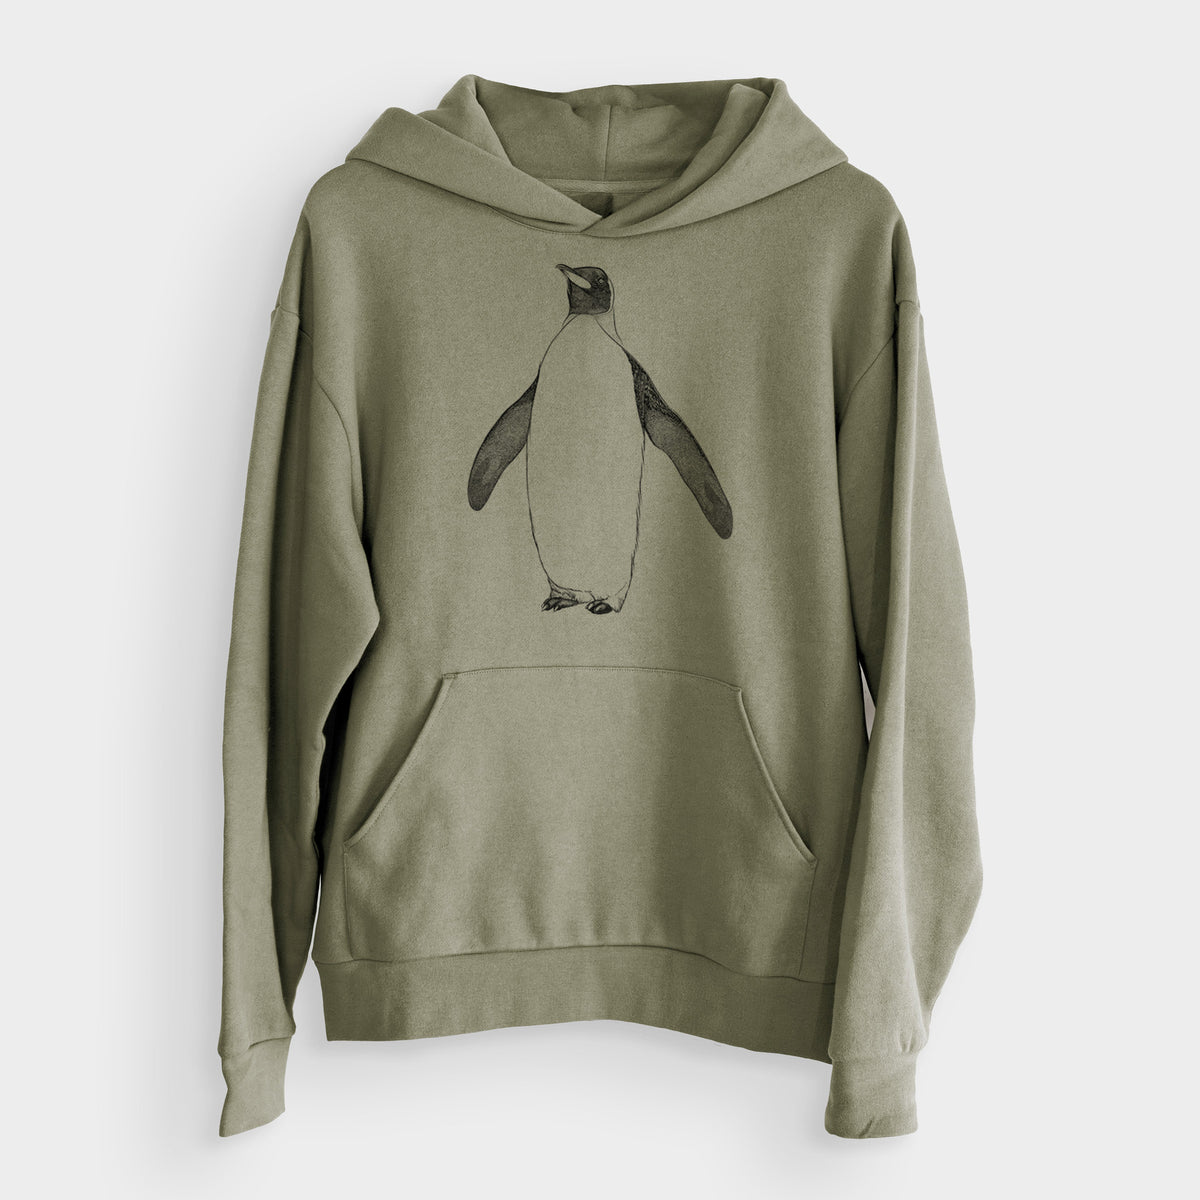 Emperor Penguin - Aptenodytes forsteri  - Bodega Midweight Hoodie